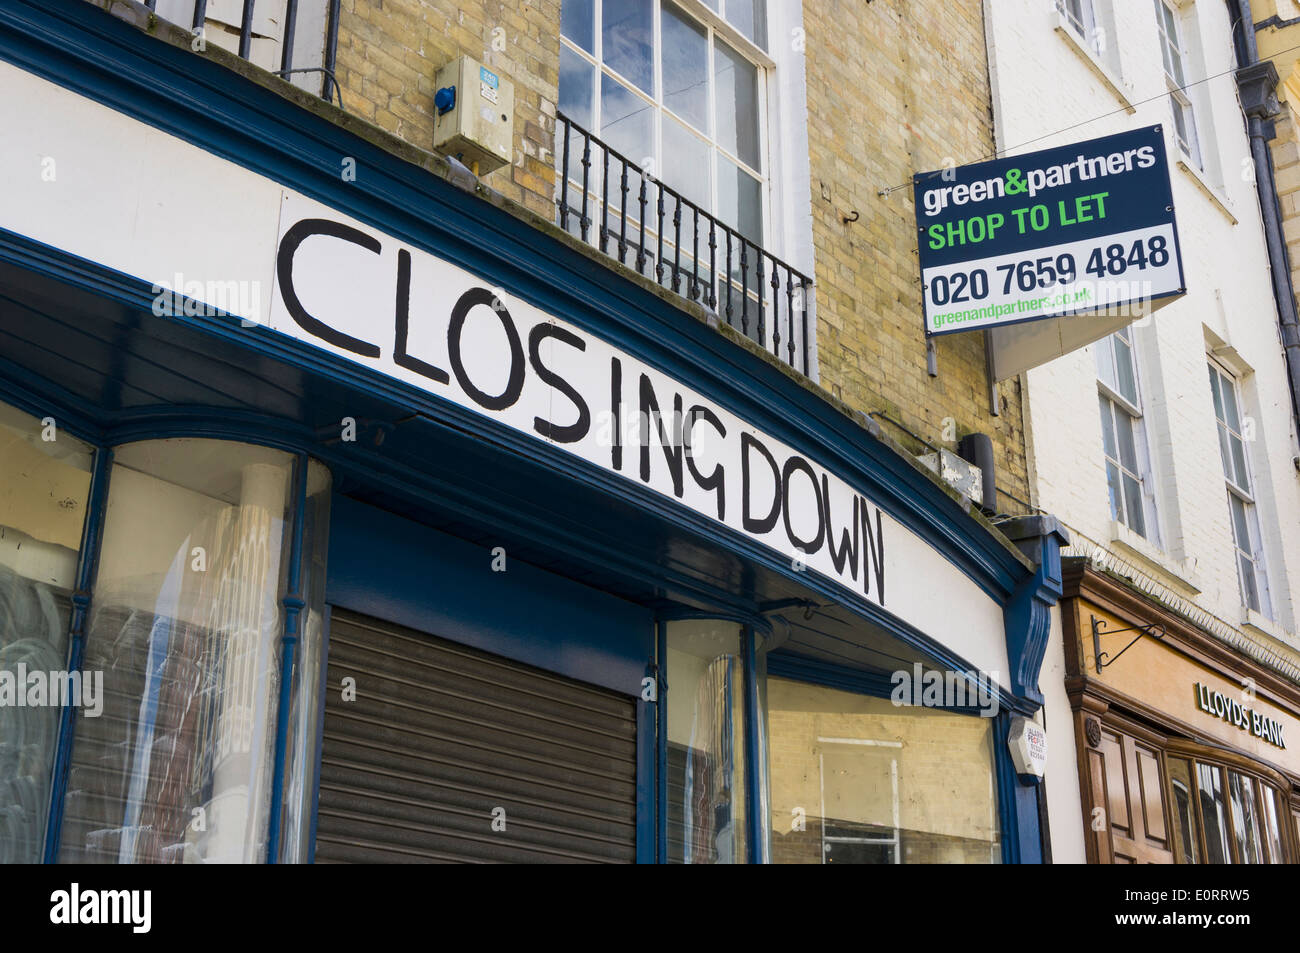 Closed Shop zu lassen, England, UK Stockfoto